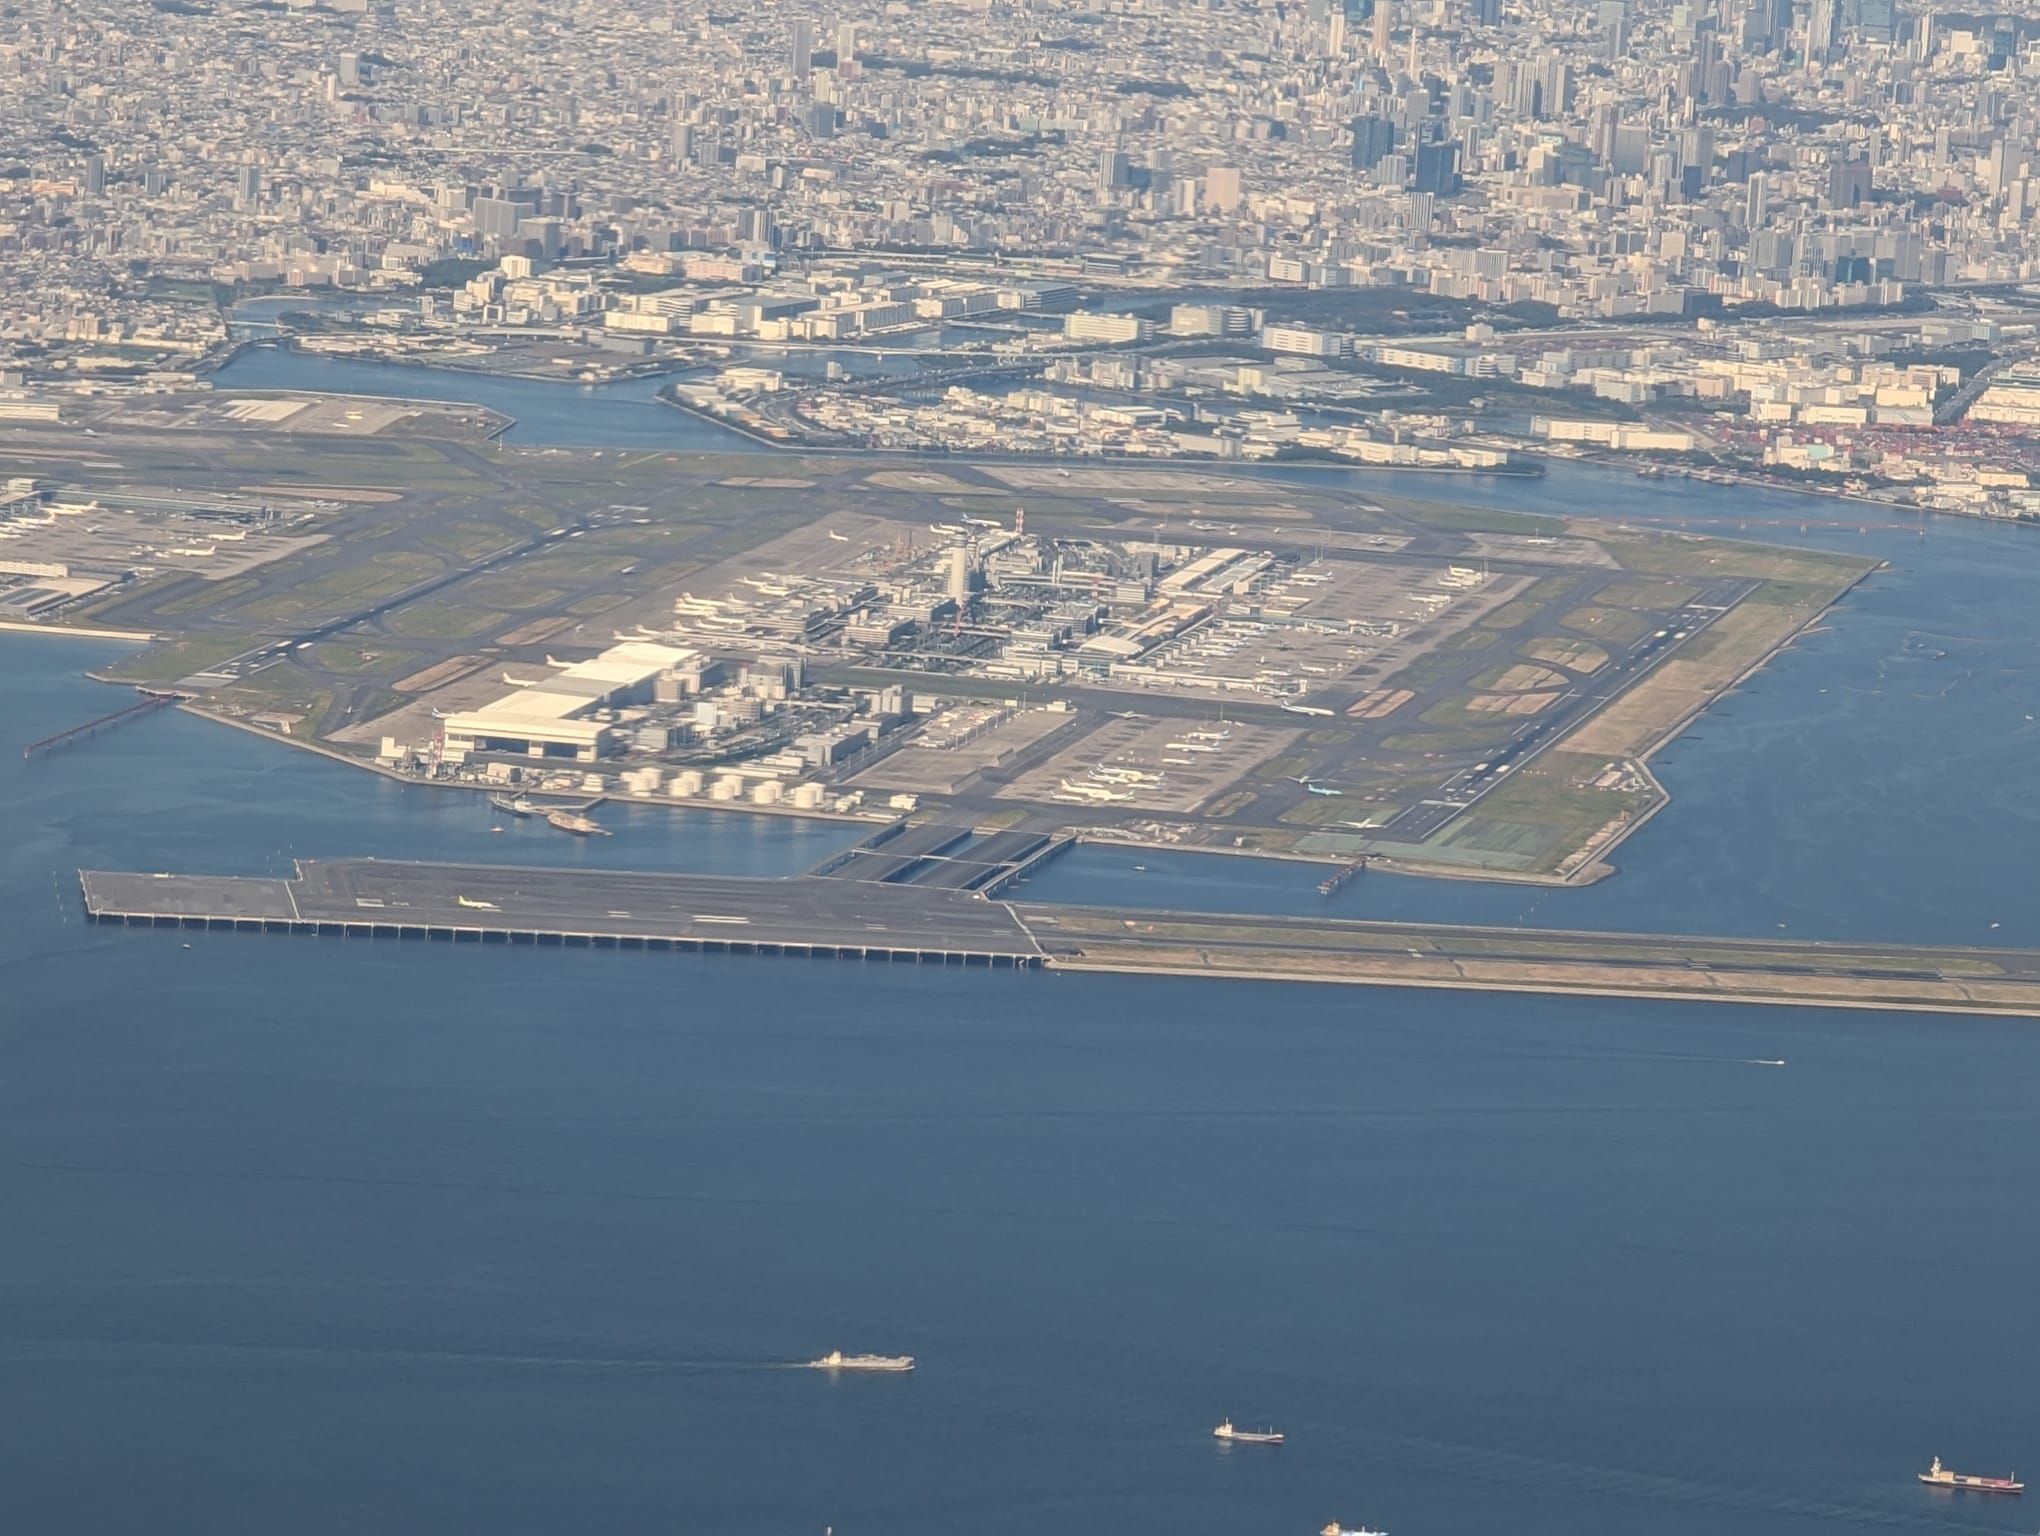 Haneda Airport from flight overhead